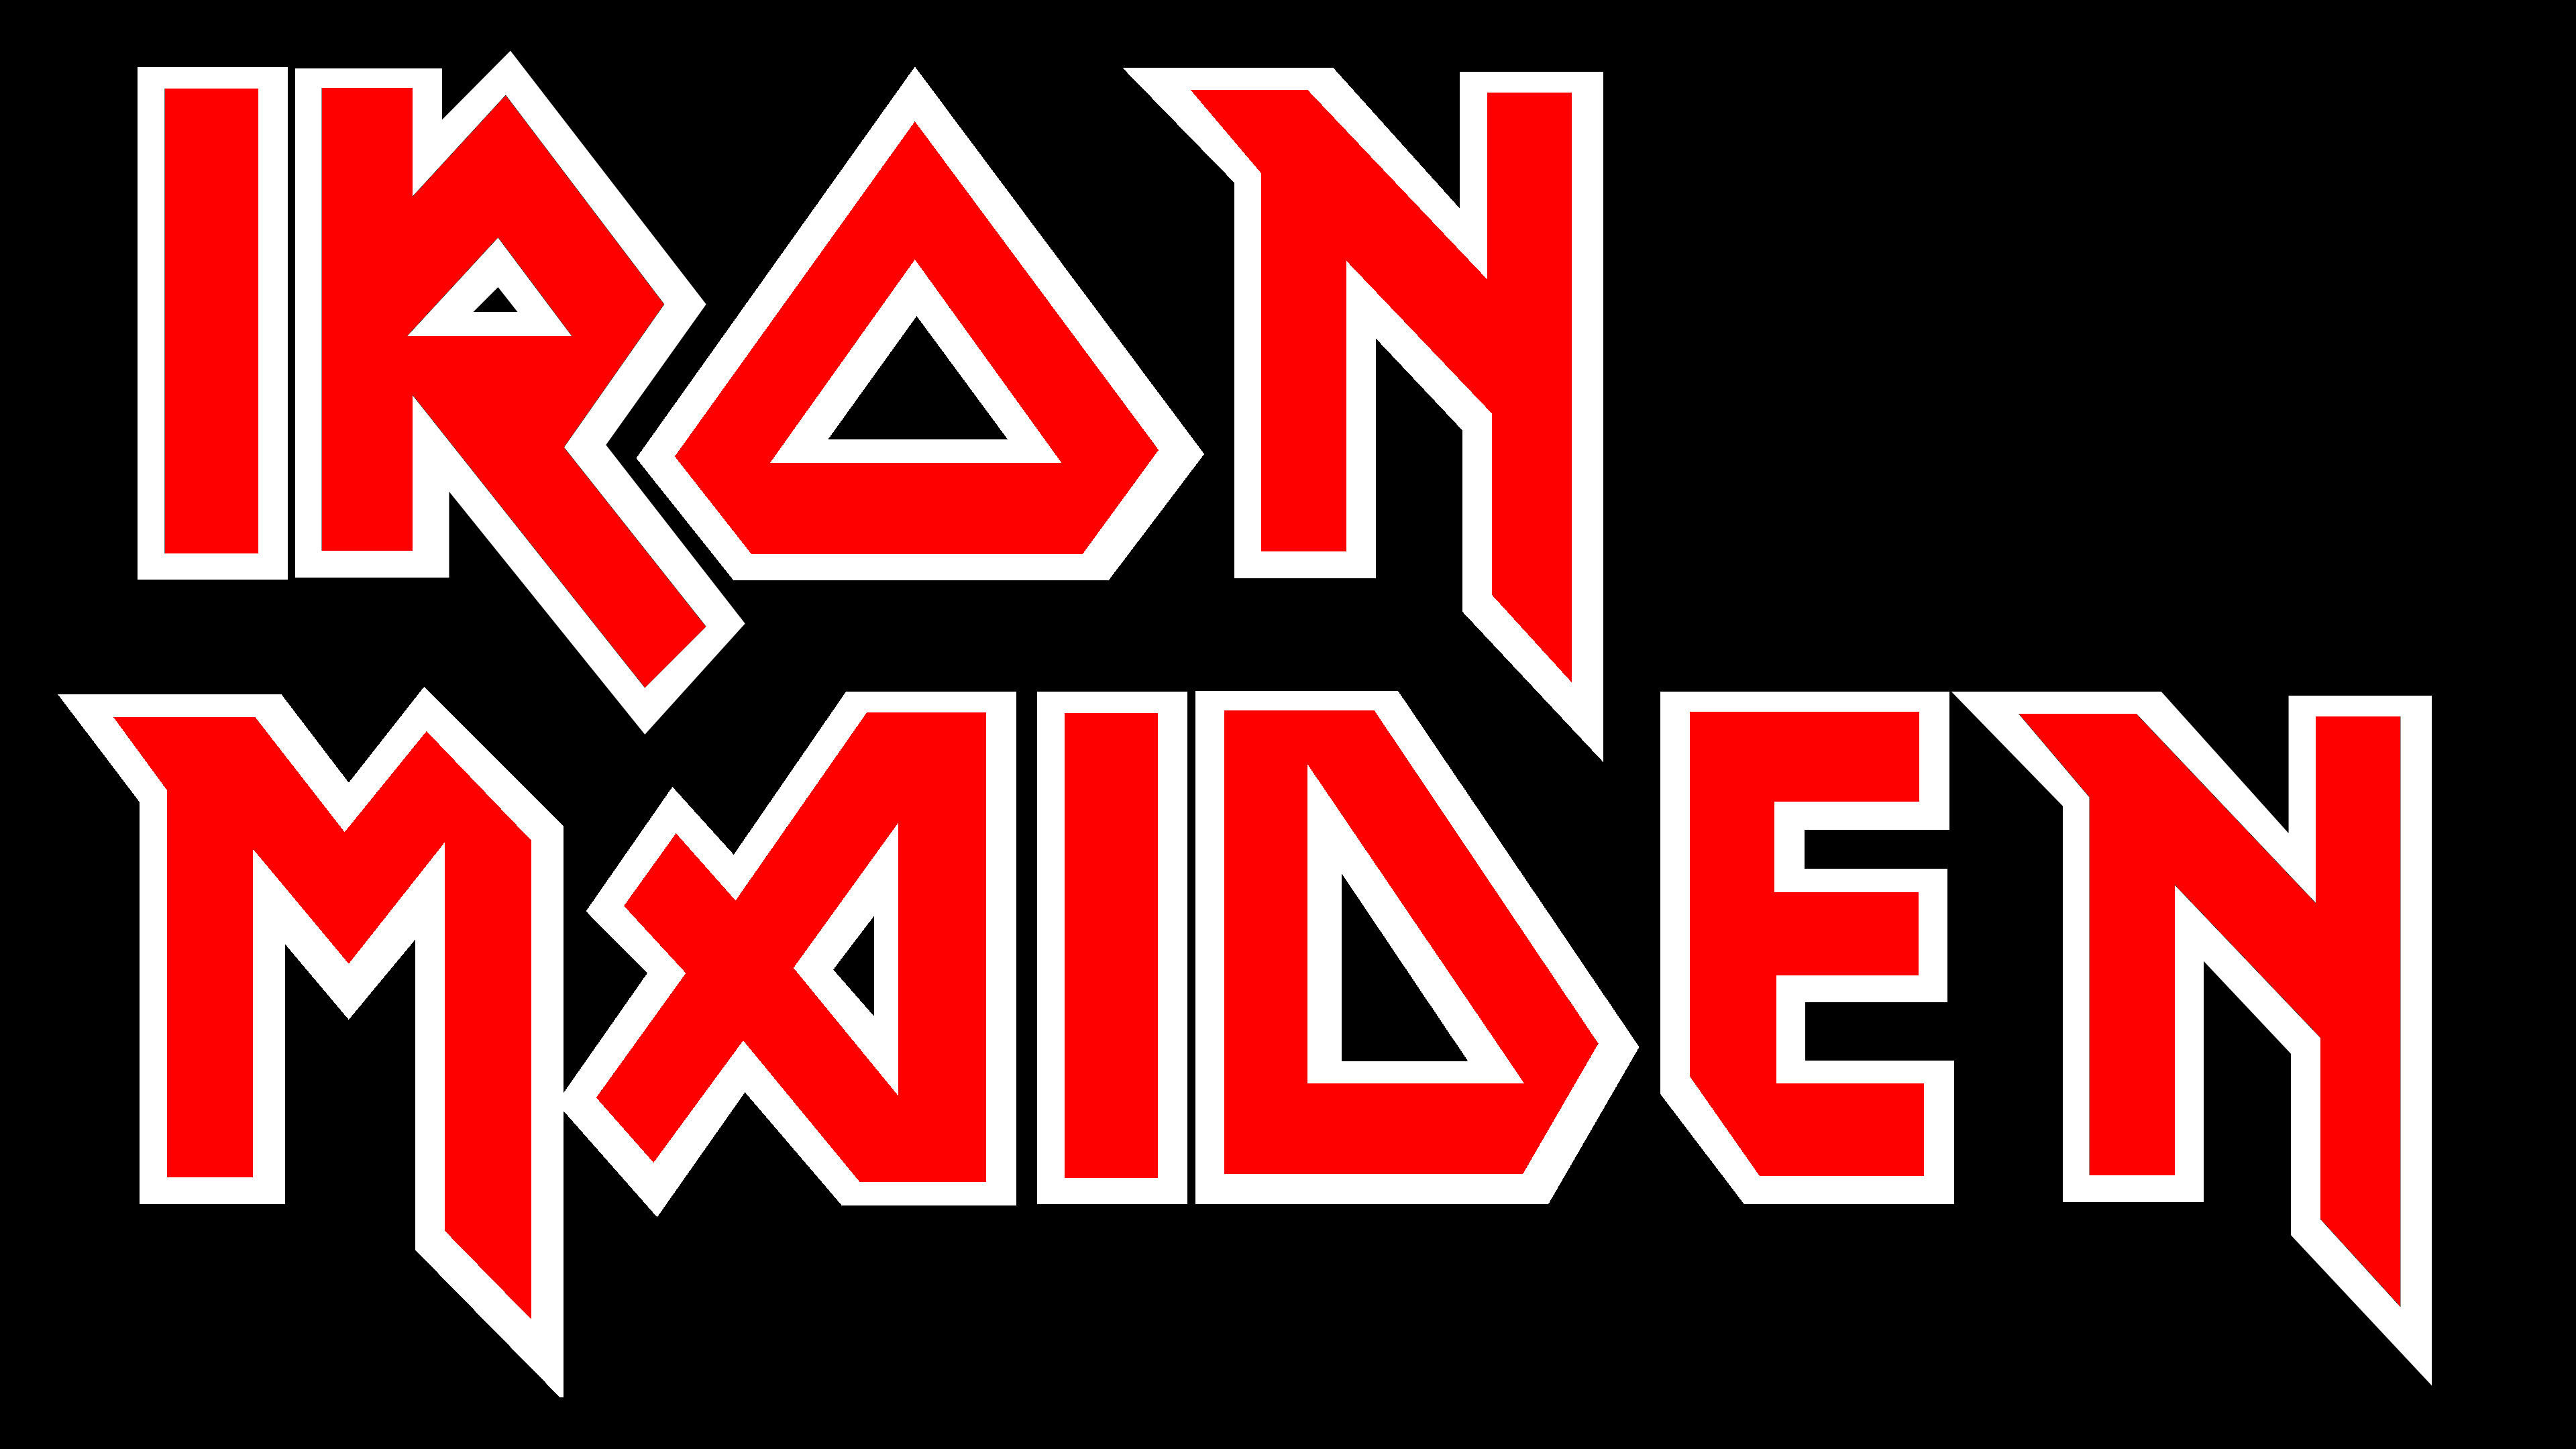 Iron Maiden Band Music, Stark 4K wallpaper, High-resolution imagery, Visually stunning, 3840x2160 4K Desktop